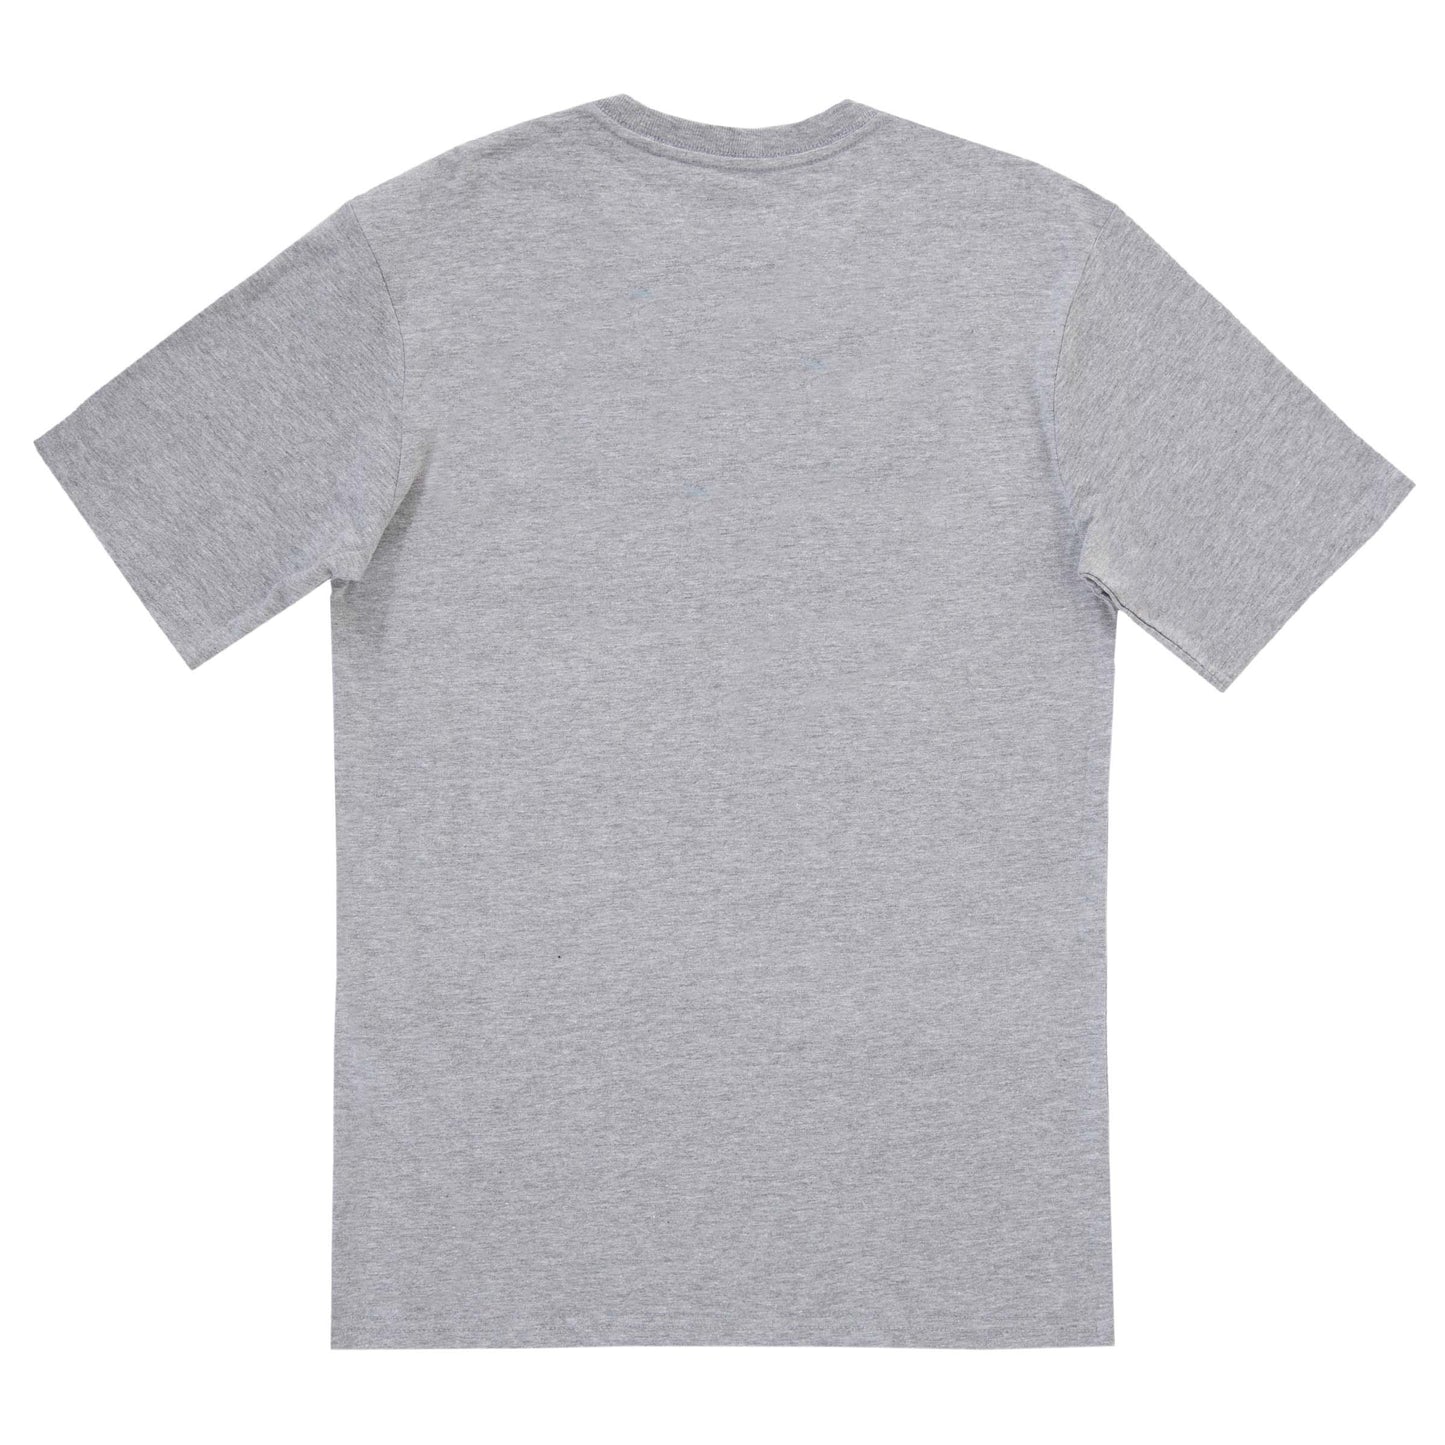 Kids Star Explosion Short Sleeve Grey T-Shirt View 3